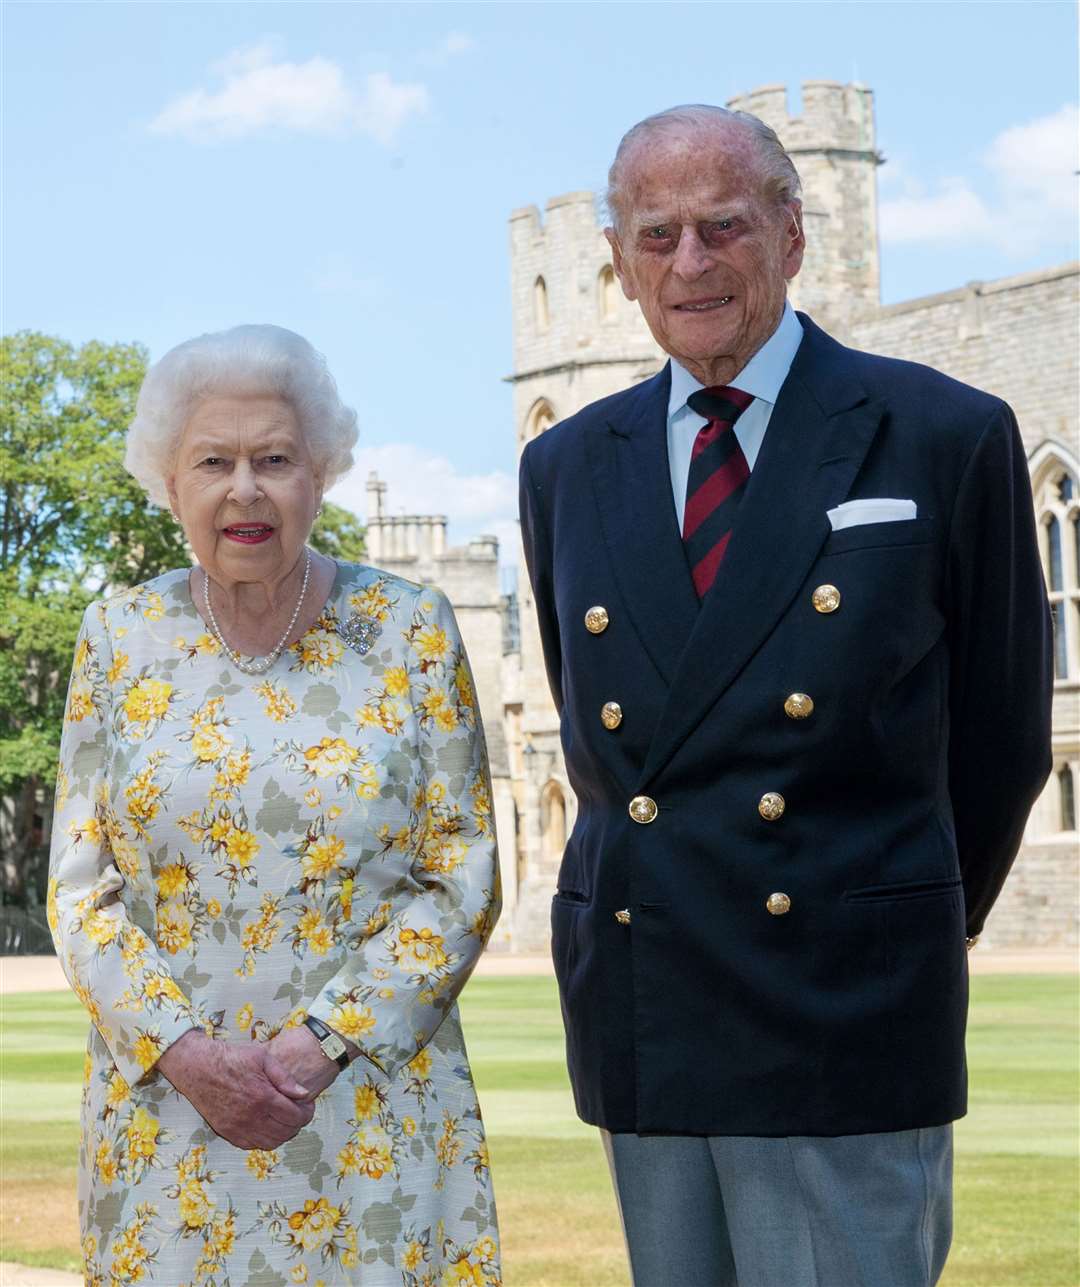 The Duke of Edinburgh has been spending lockdown with the Queen at Windsor Castle (Steve Parsons/PA)